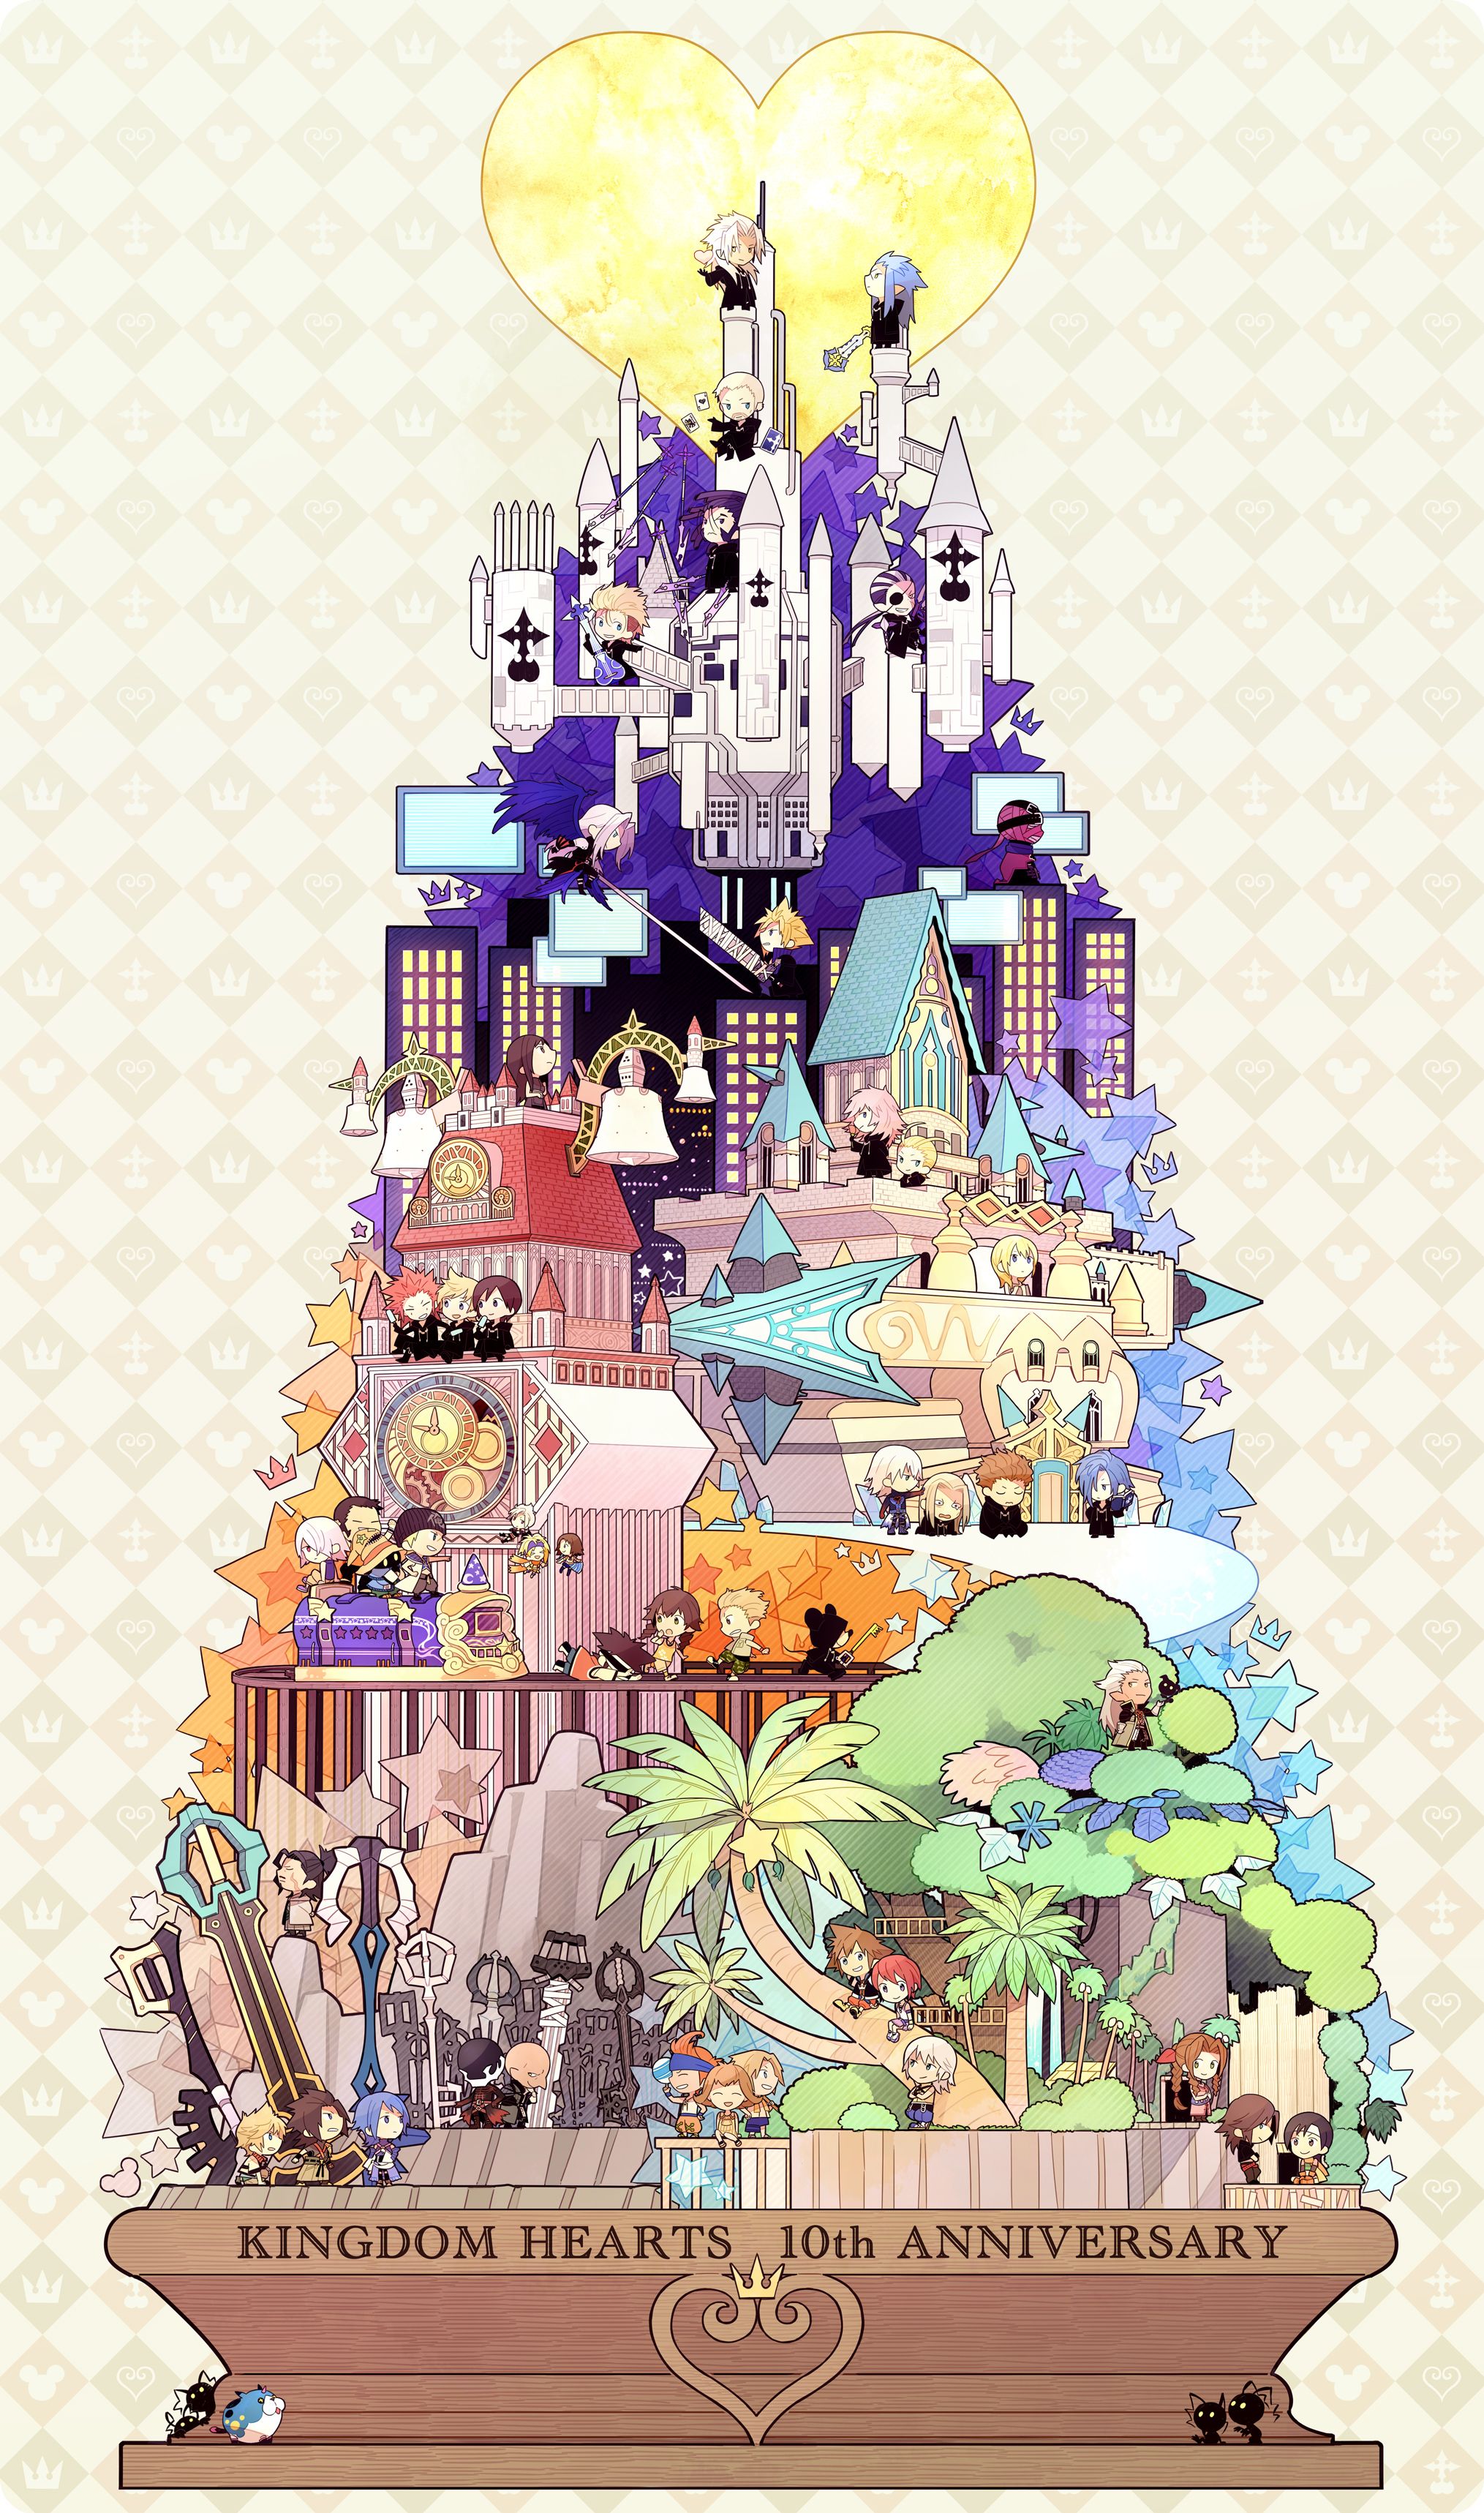 Final Fantasy IX, Mobile Wallpaper Anime Image Board